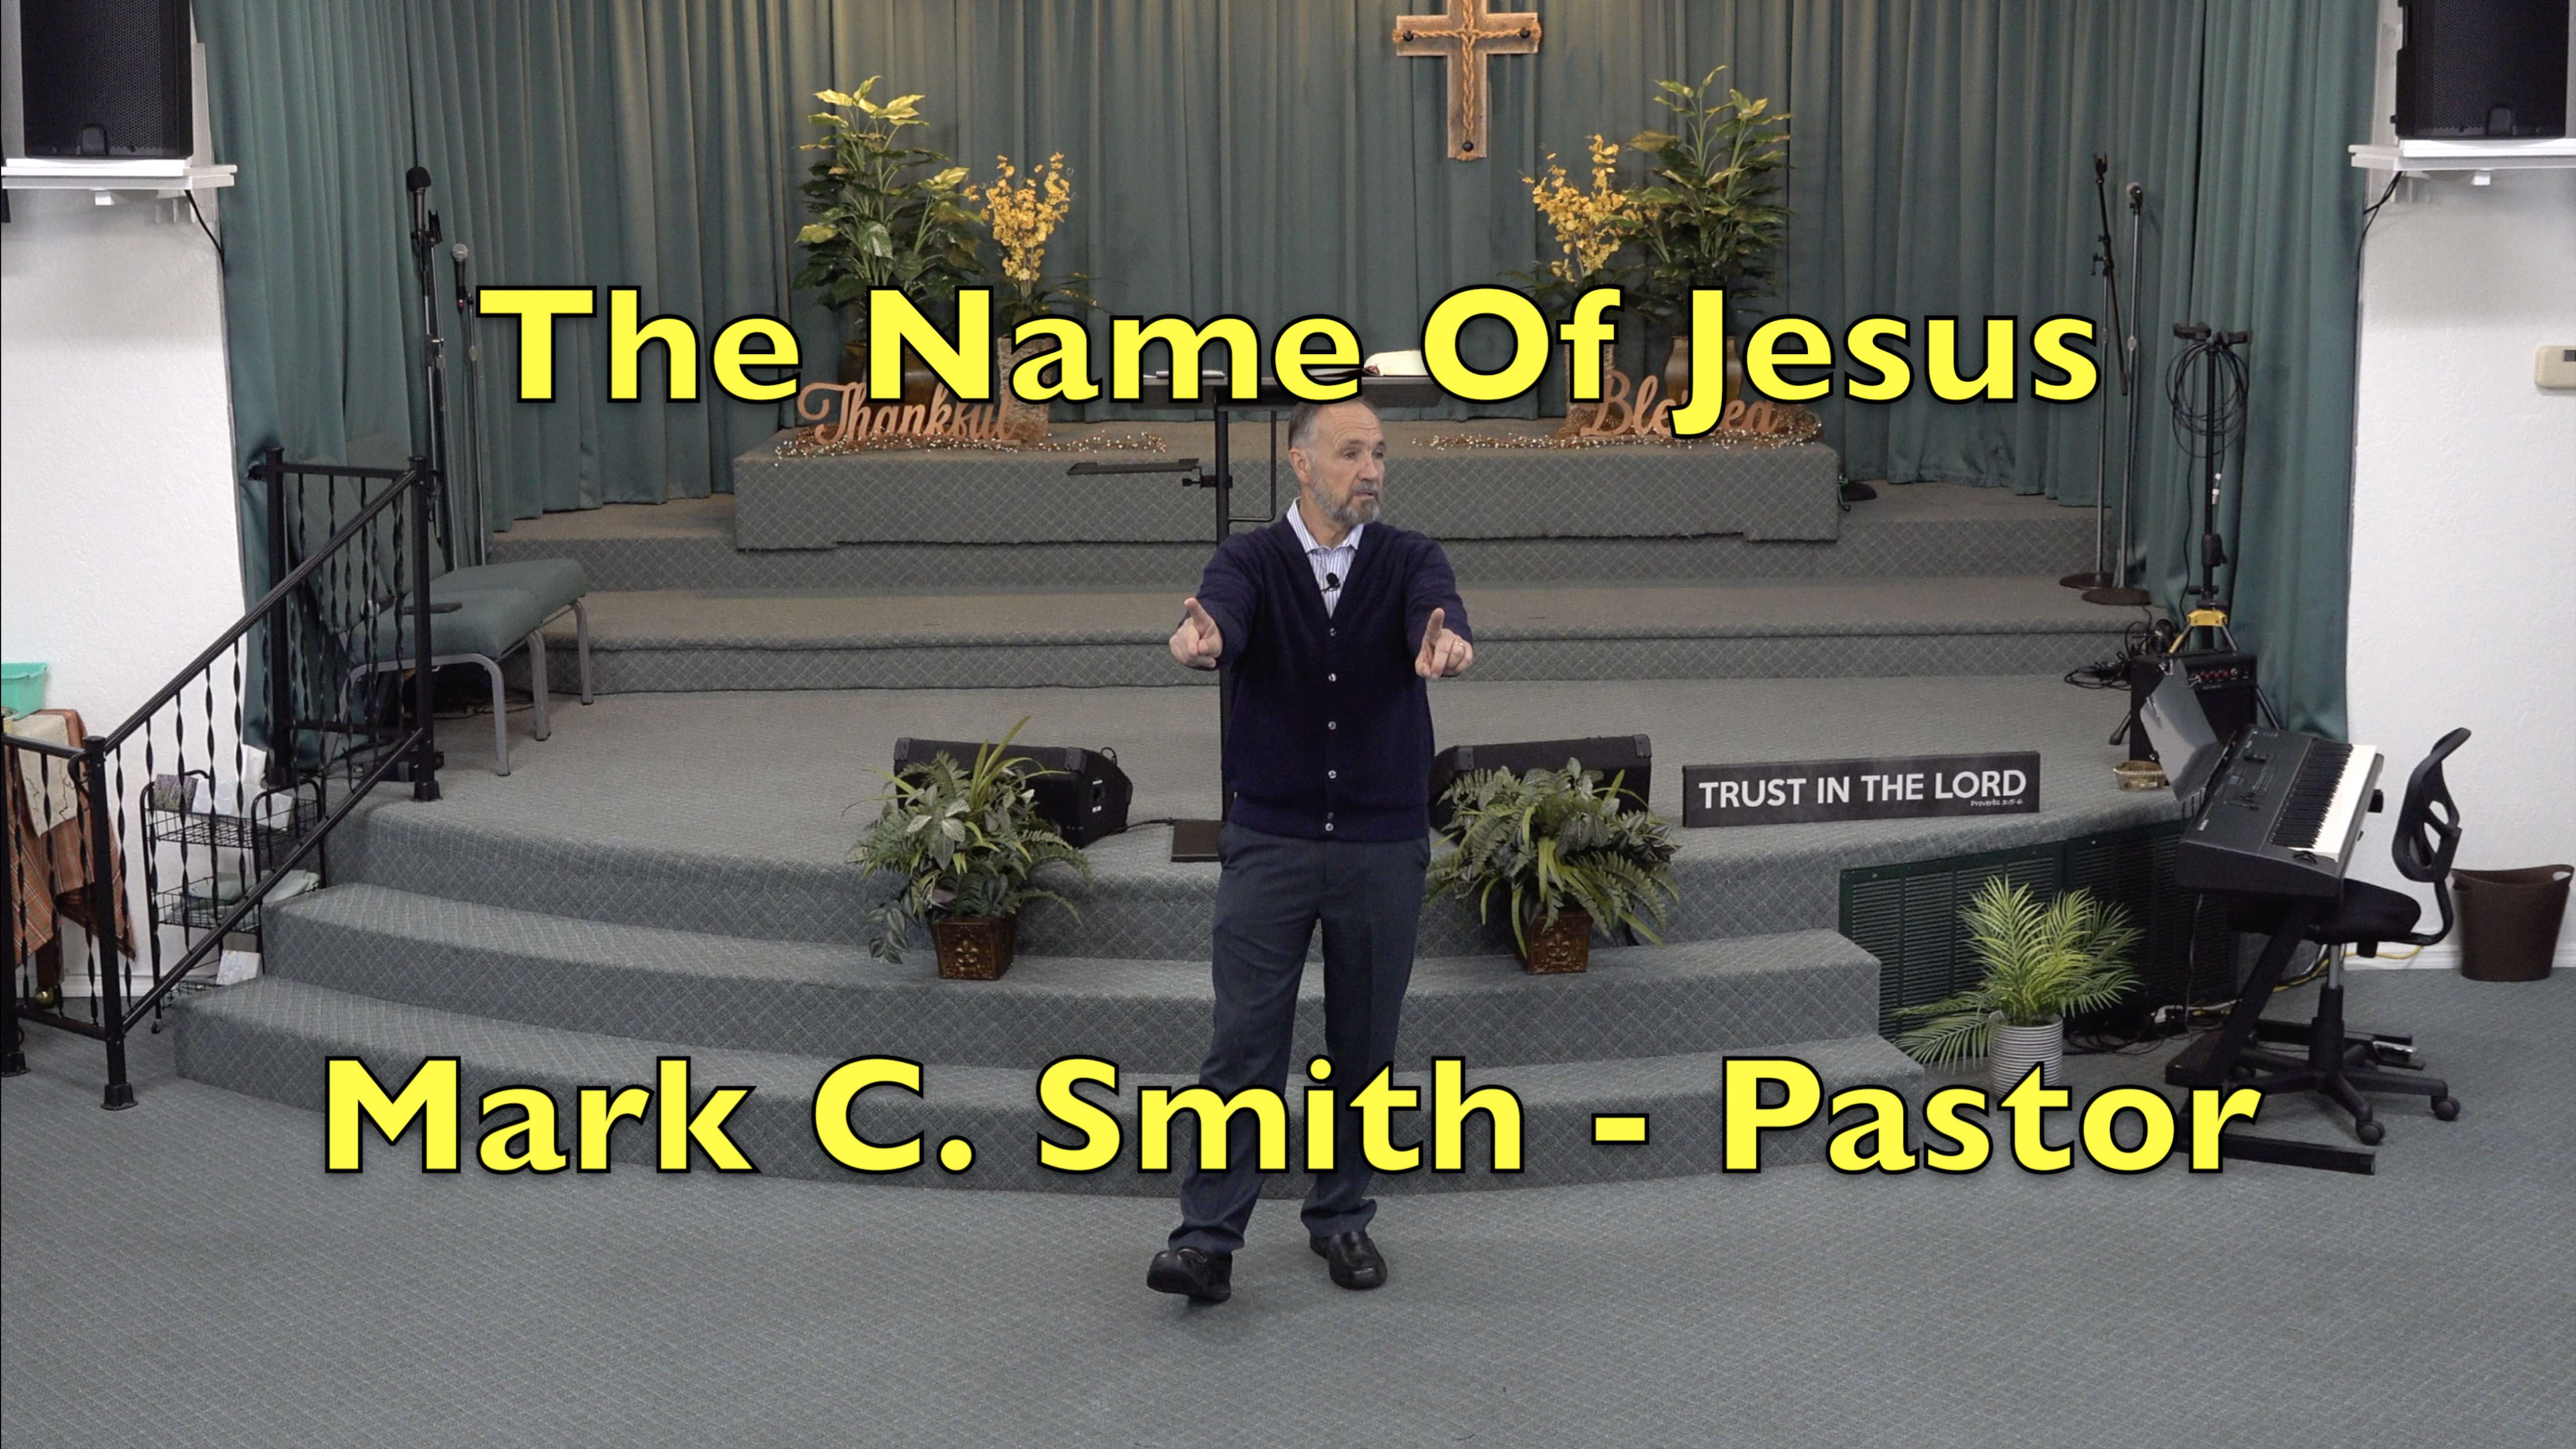 The Name Jesus